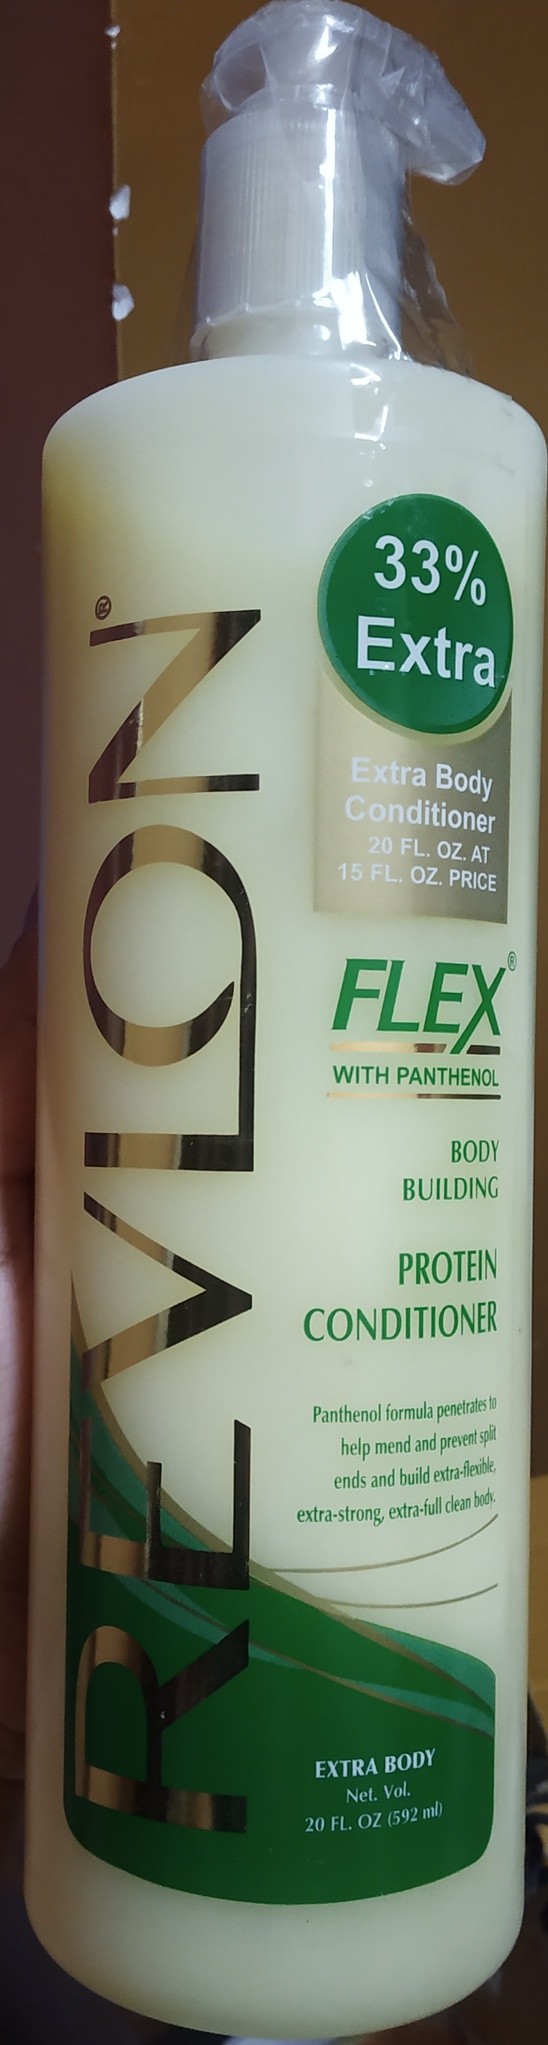 Revlon Flex (with Panthenol) Body Building Protein Conditioner